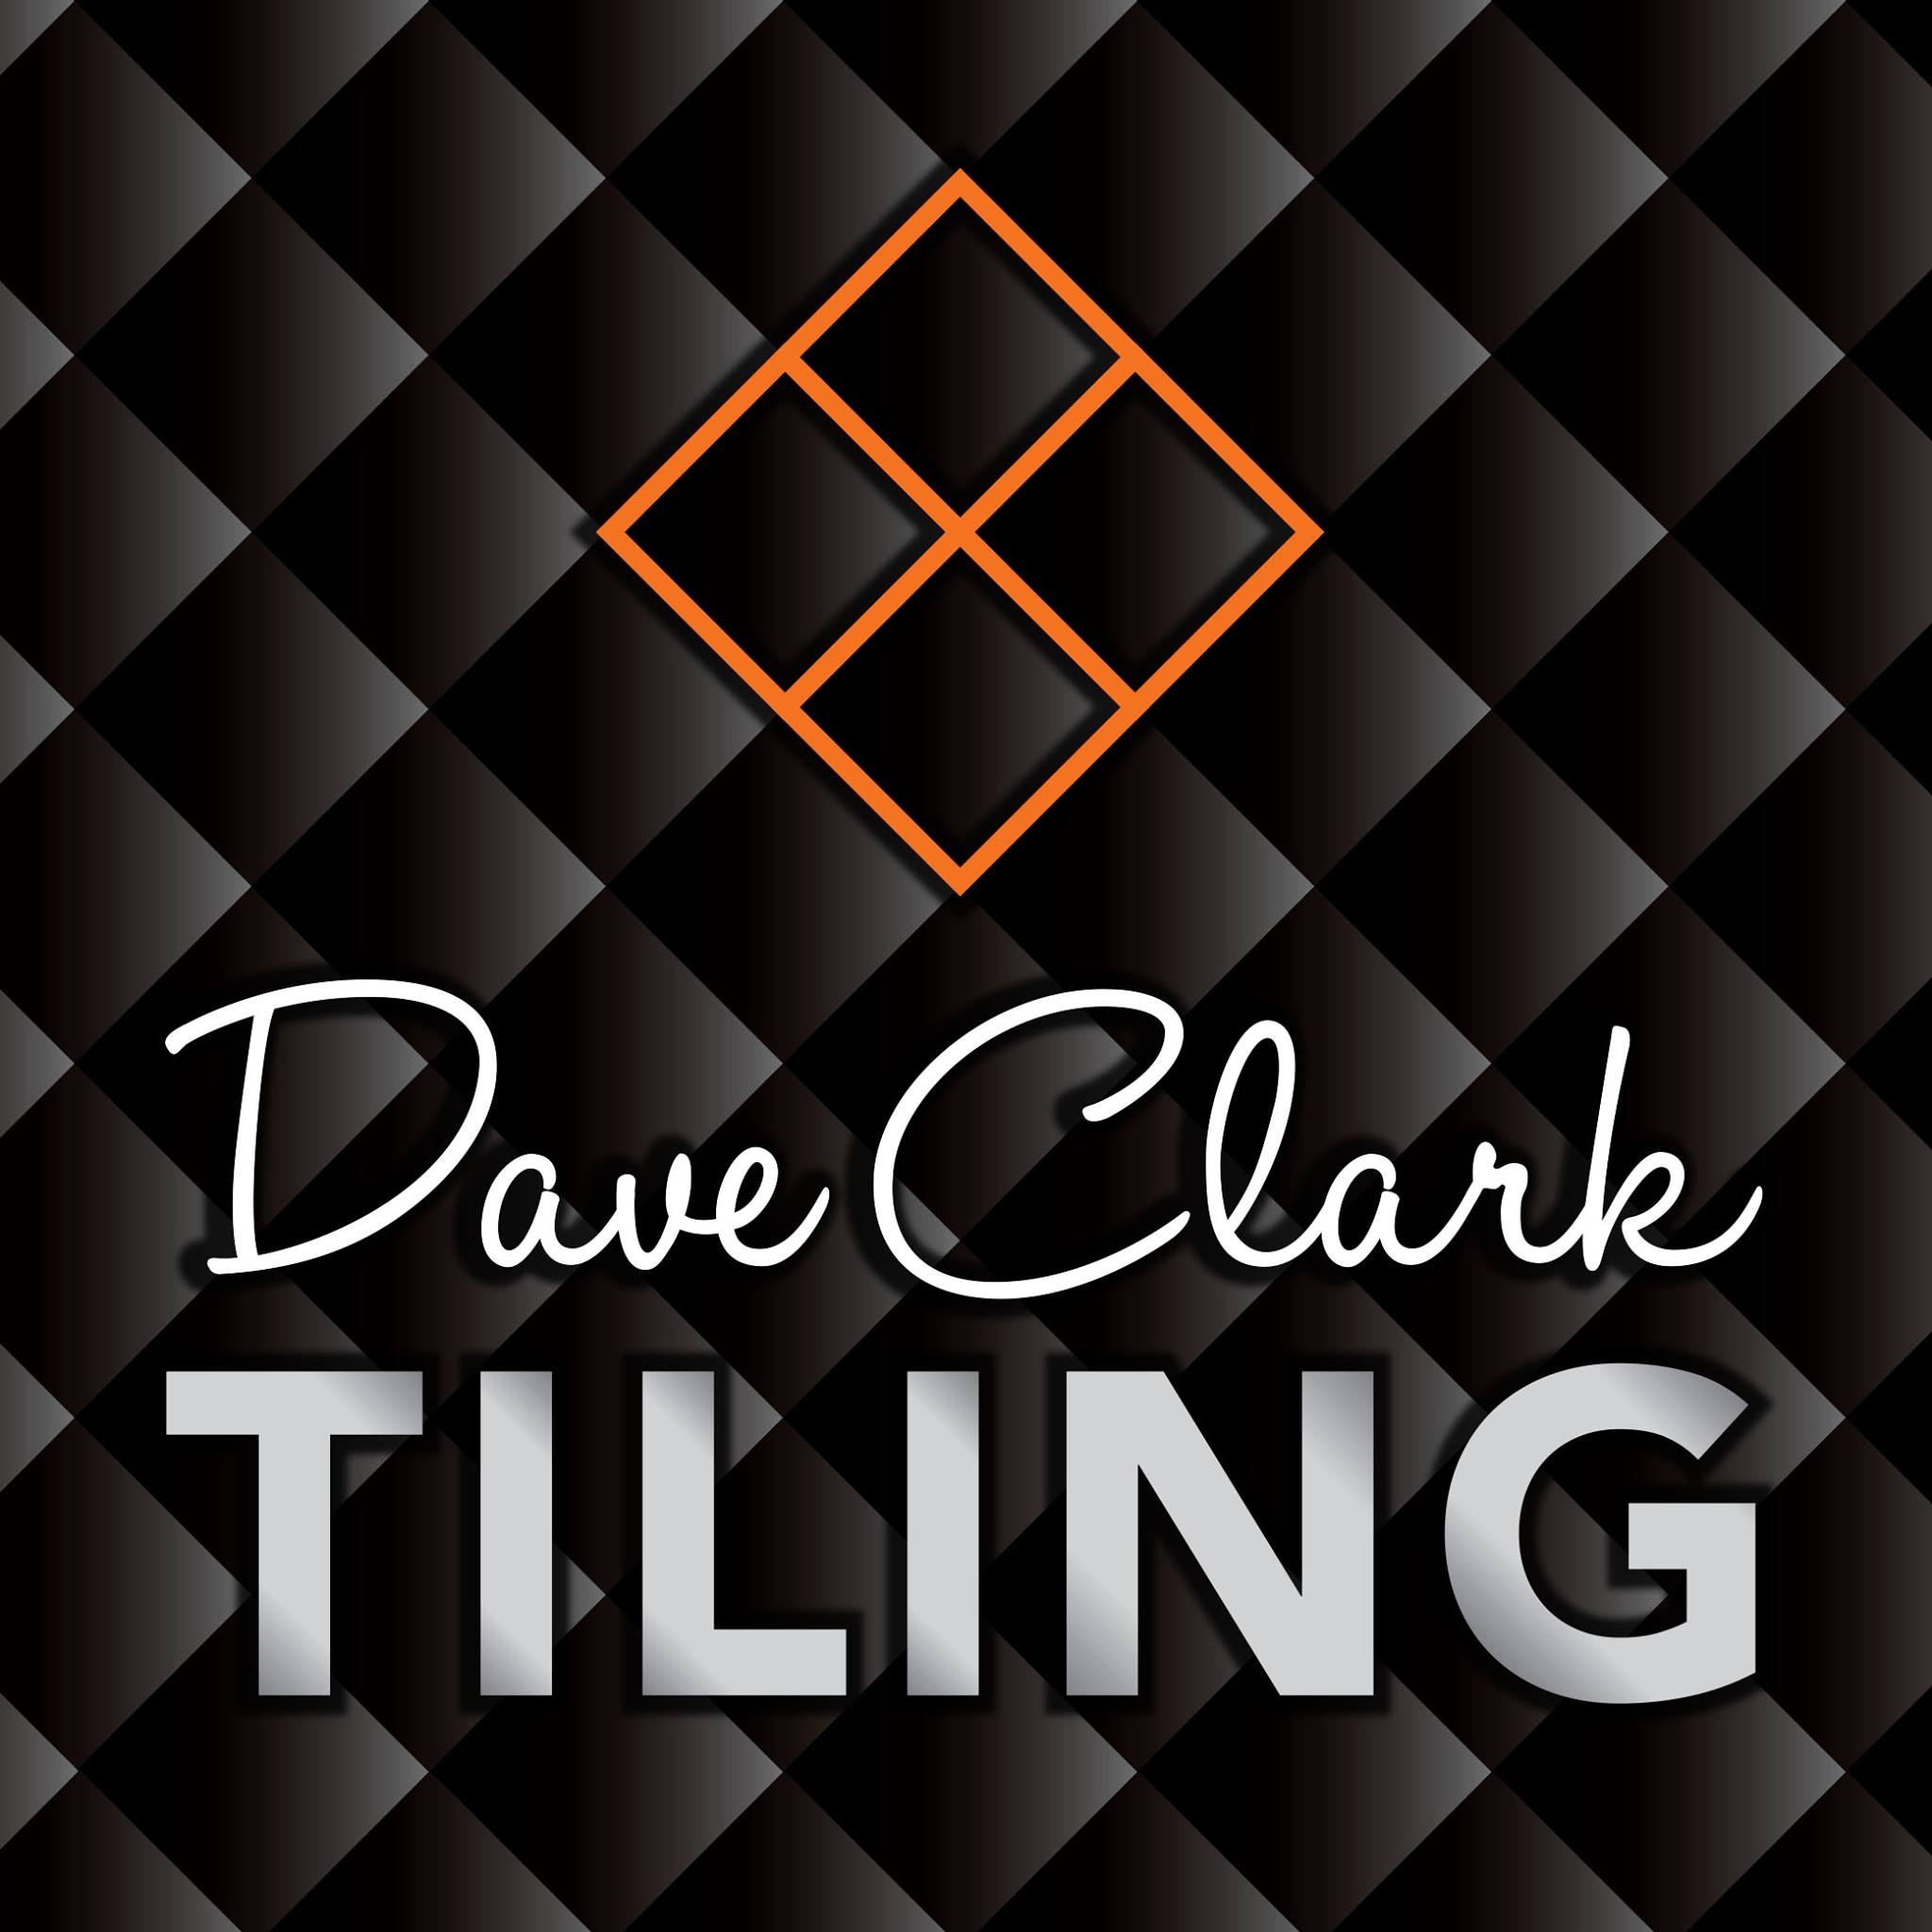 Dave Clark square (003)